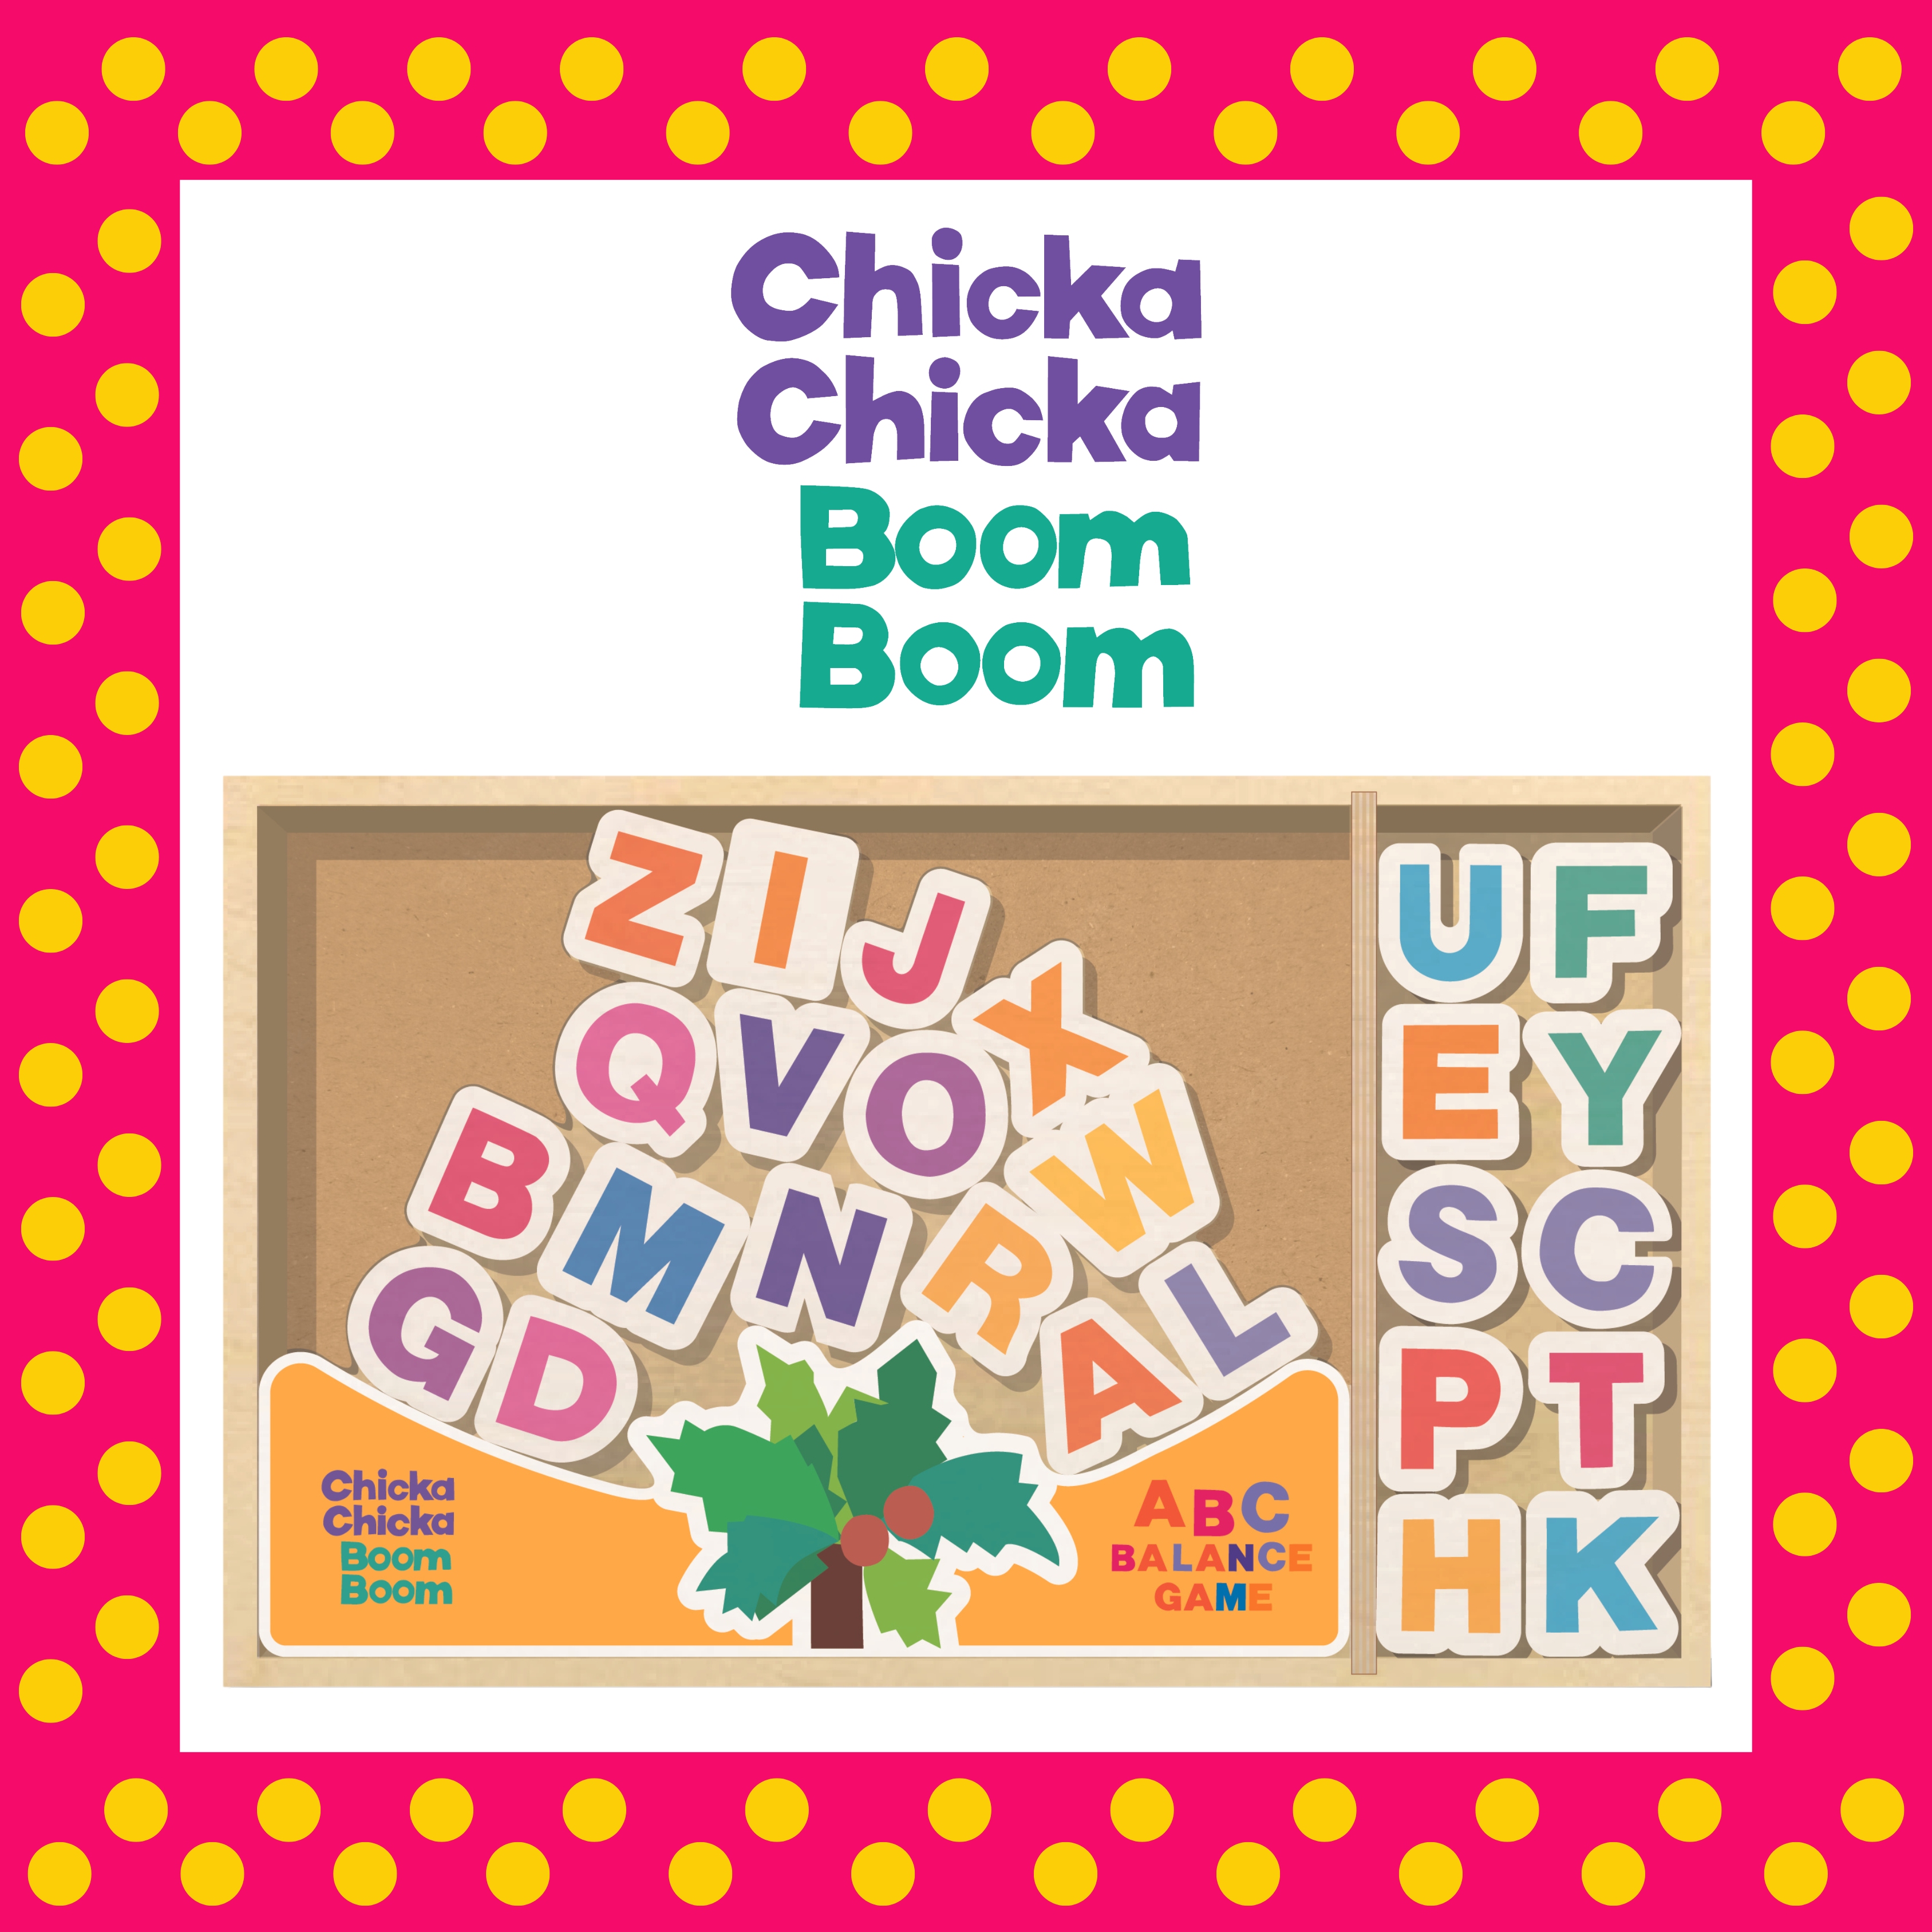 Chicka Chicka Boom Boom - ABC Balance Game 2